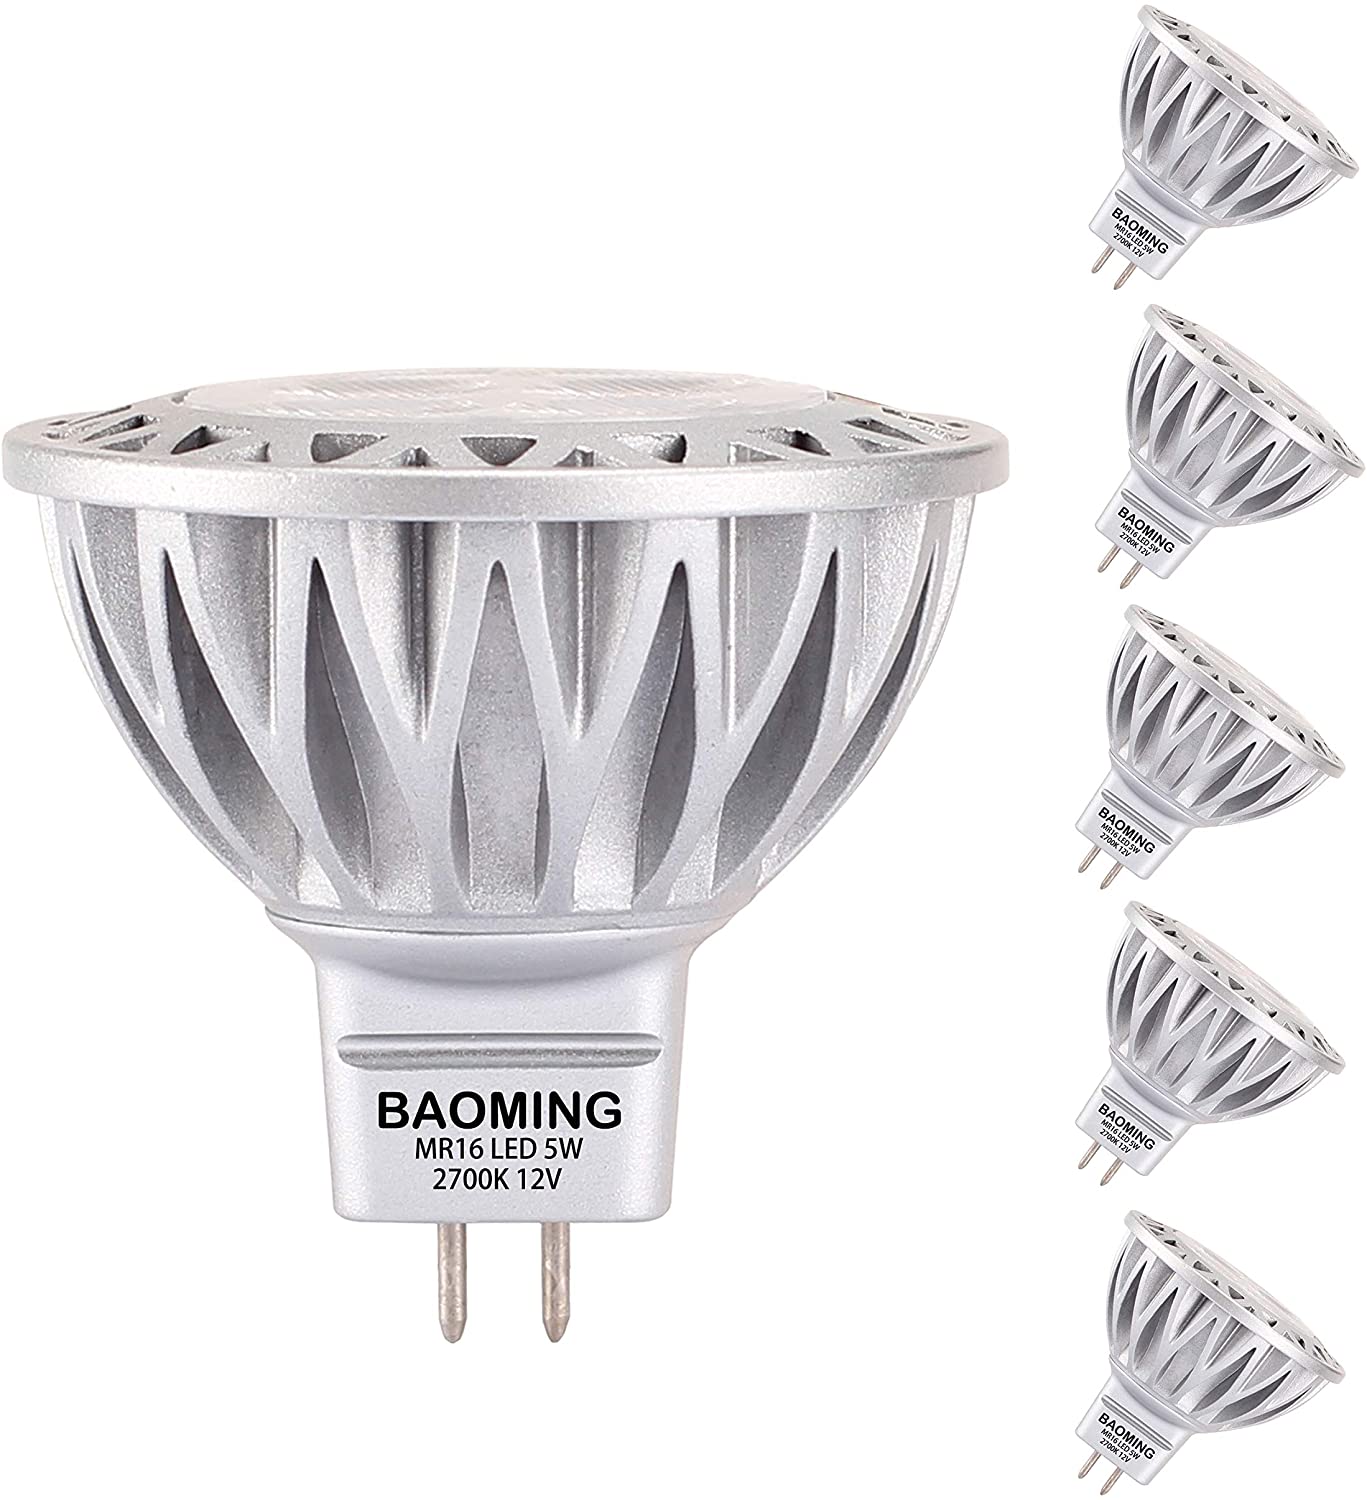 BAOMING MR16 LED Bulb 5W, 50 Watt MR16 Halogen Equivalent